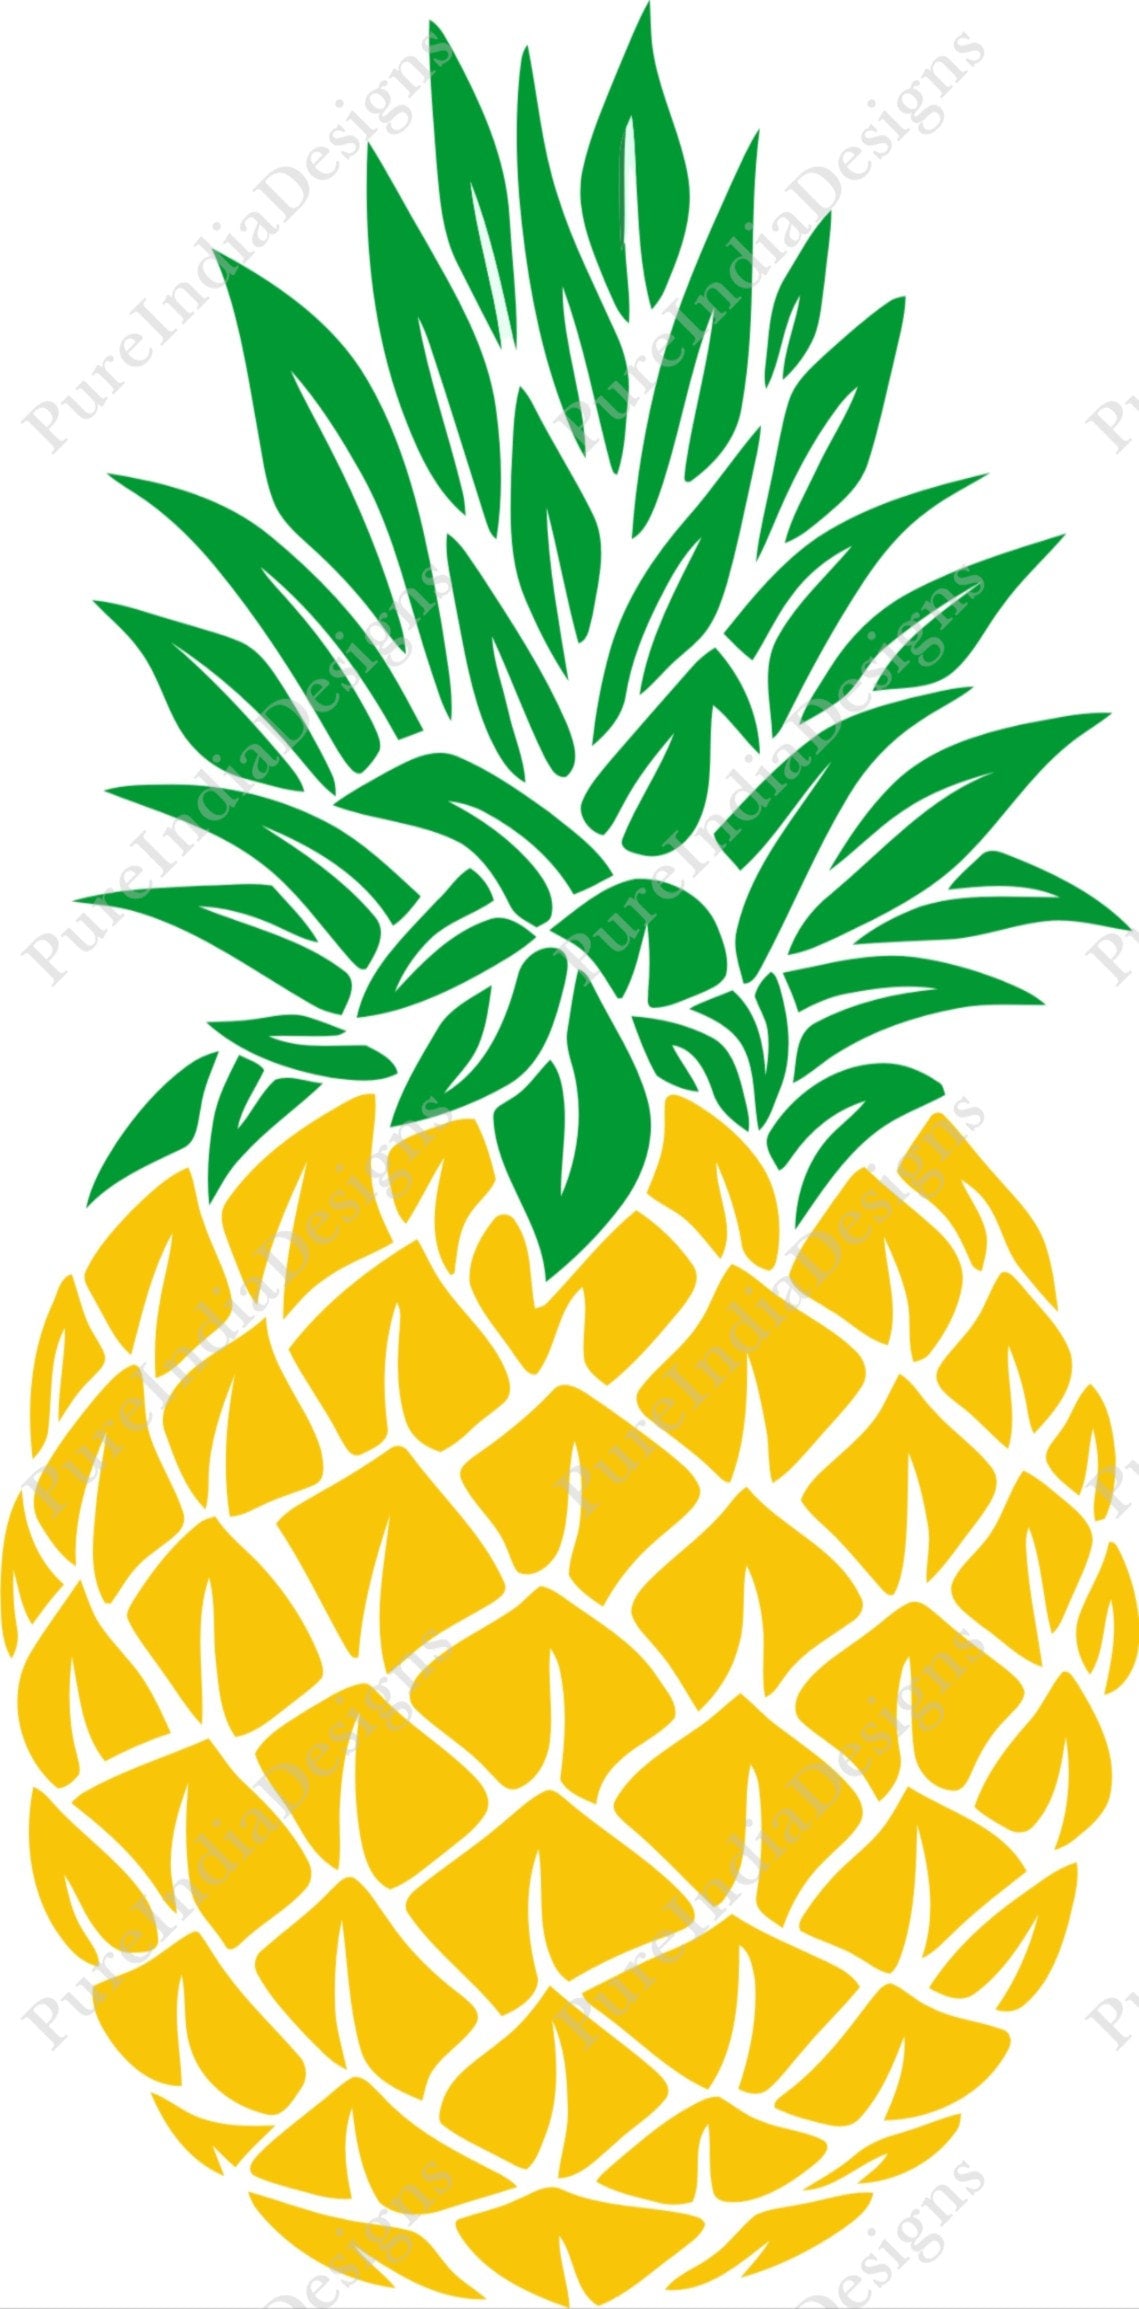 Pineapple SVG Pineapple Monogram SVG SVG Files Cricut Cut